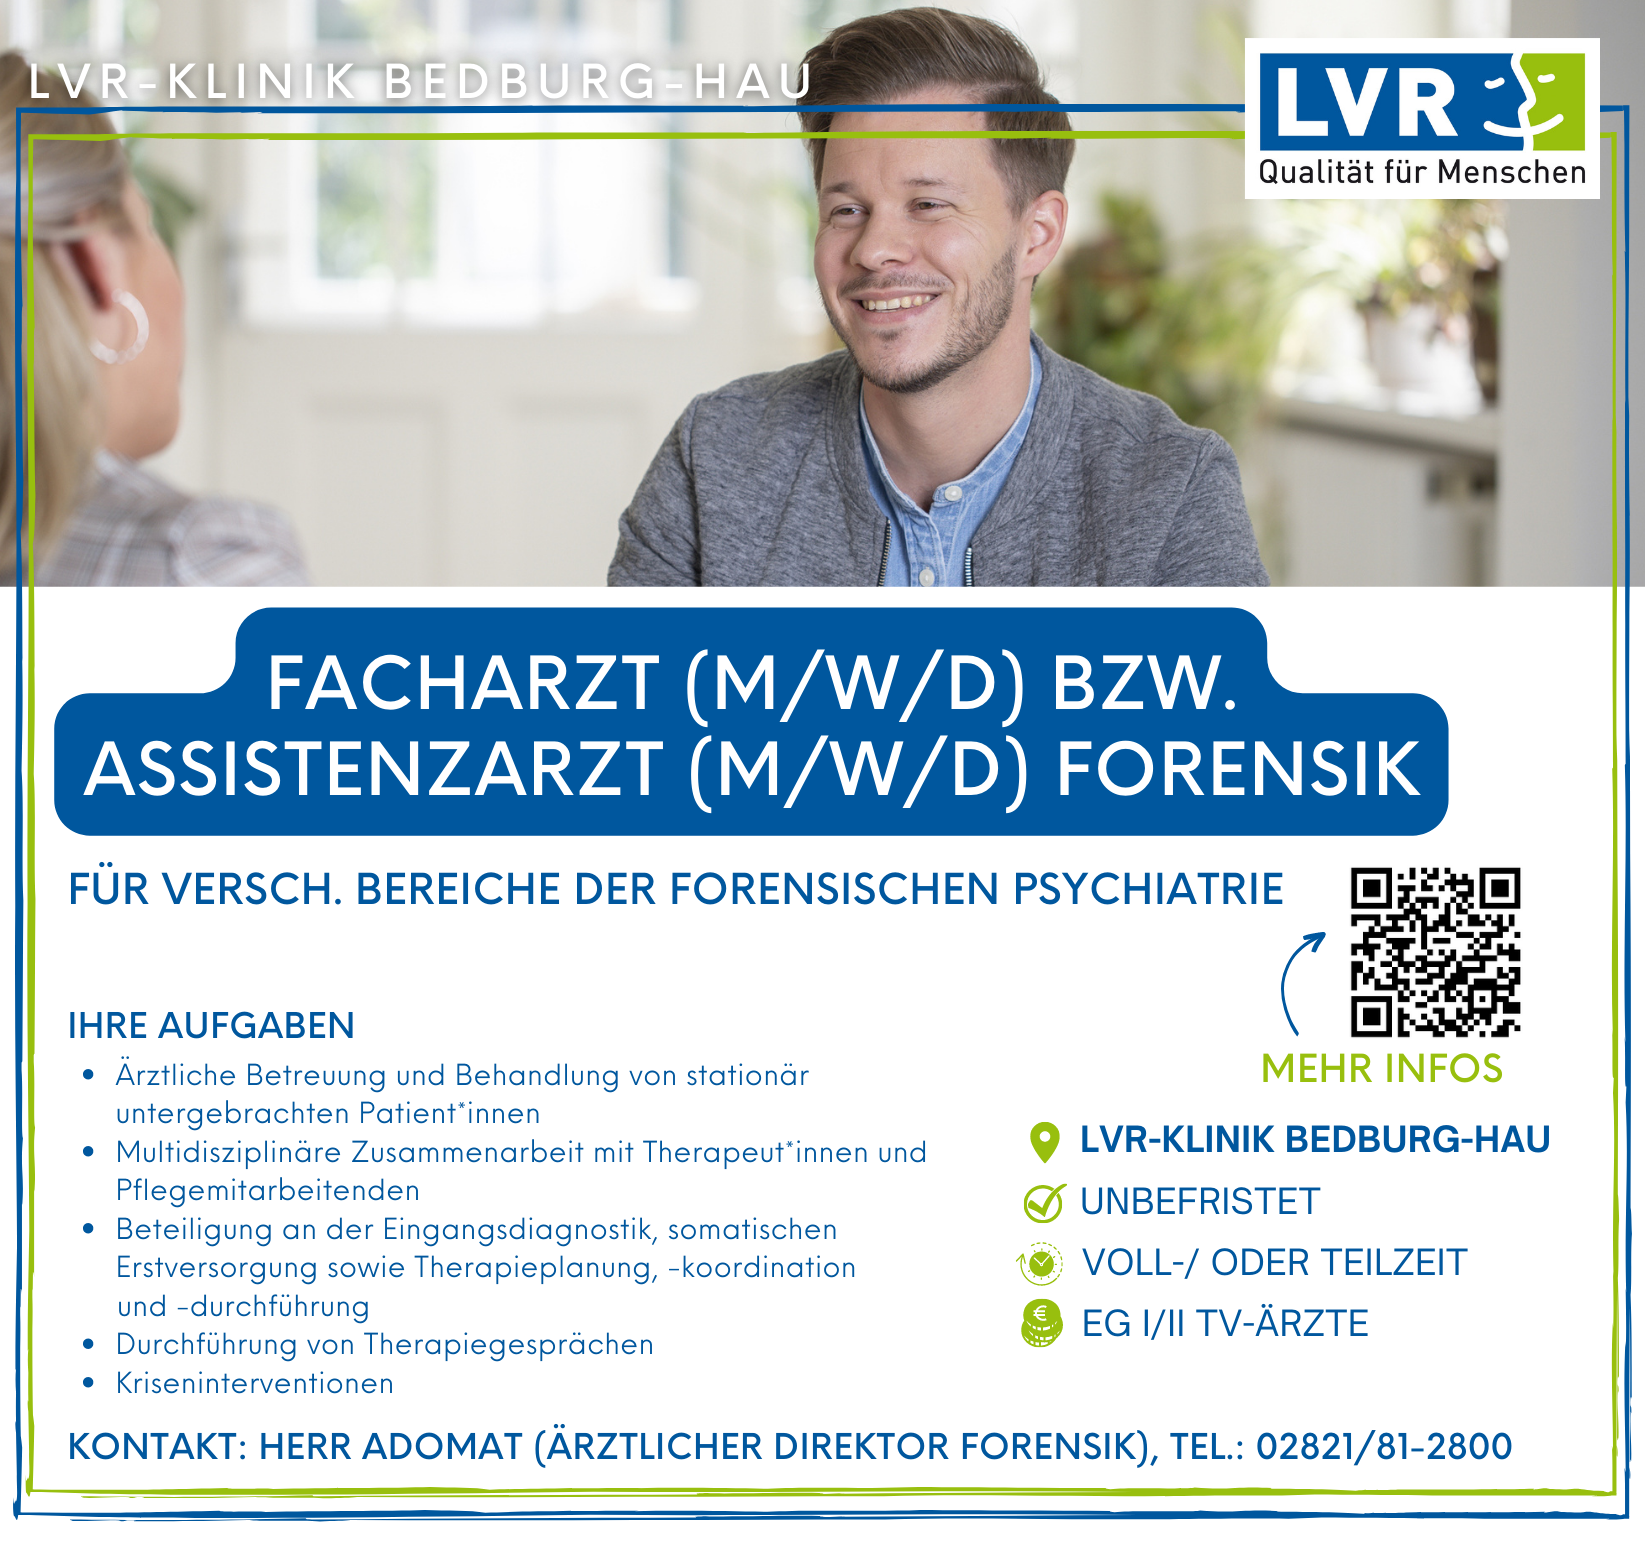 LVR-Klinik Bedburg-Hau Facharzt/Fachärztin/Assistenzarzt/Assistenzärztin Forensik (m/w/d) Bedburg-Hau medicalcompass.de